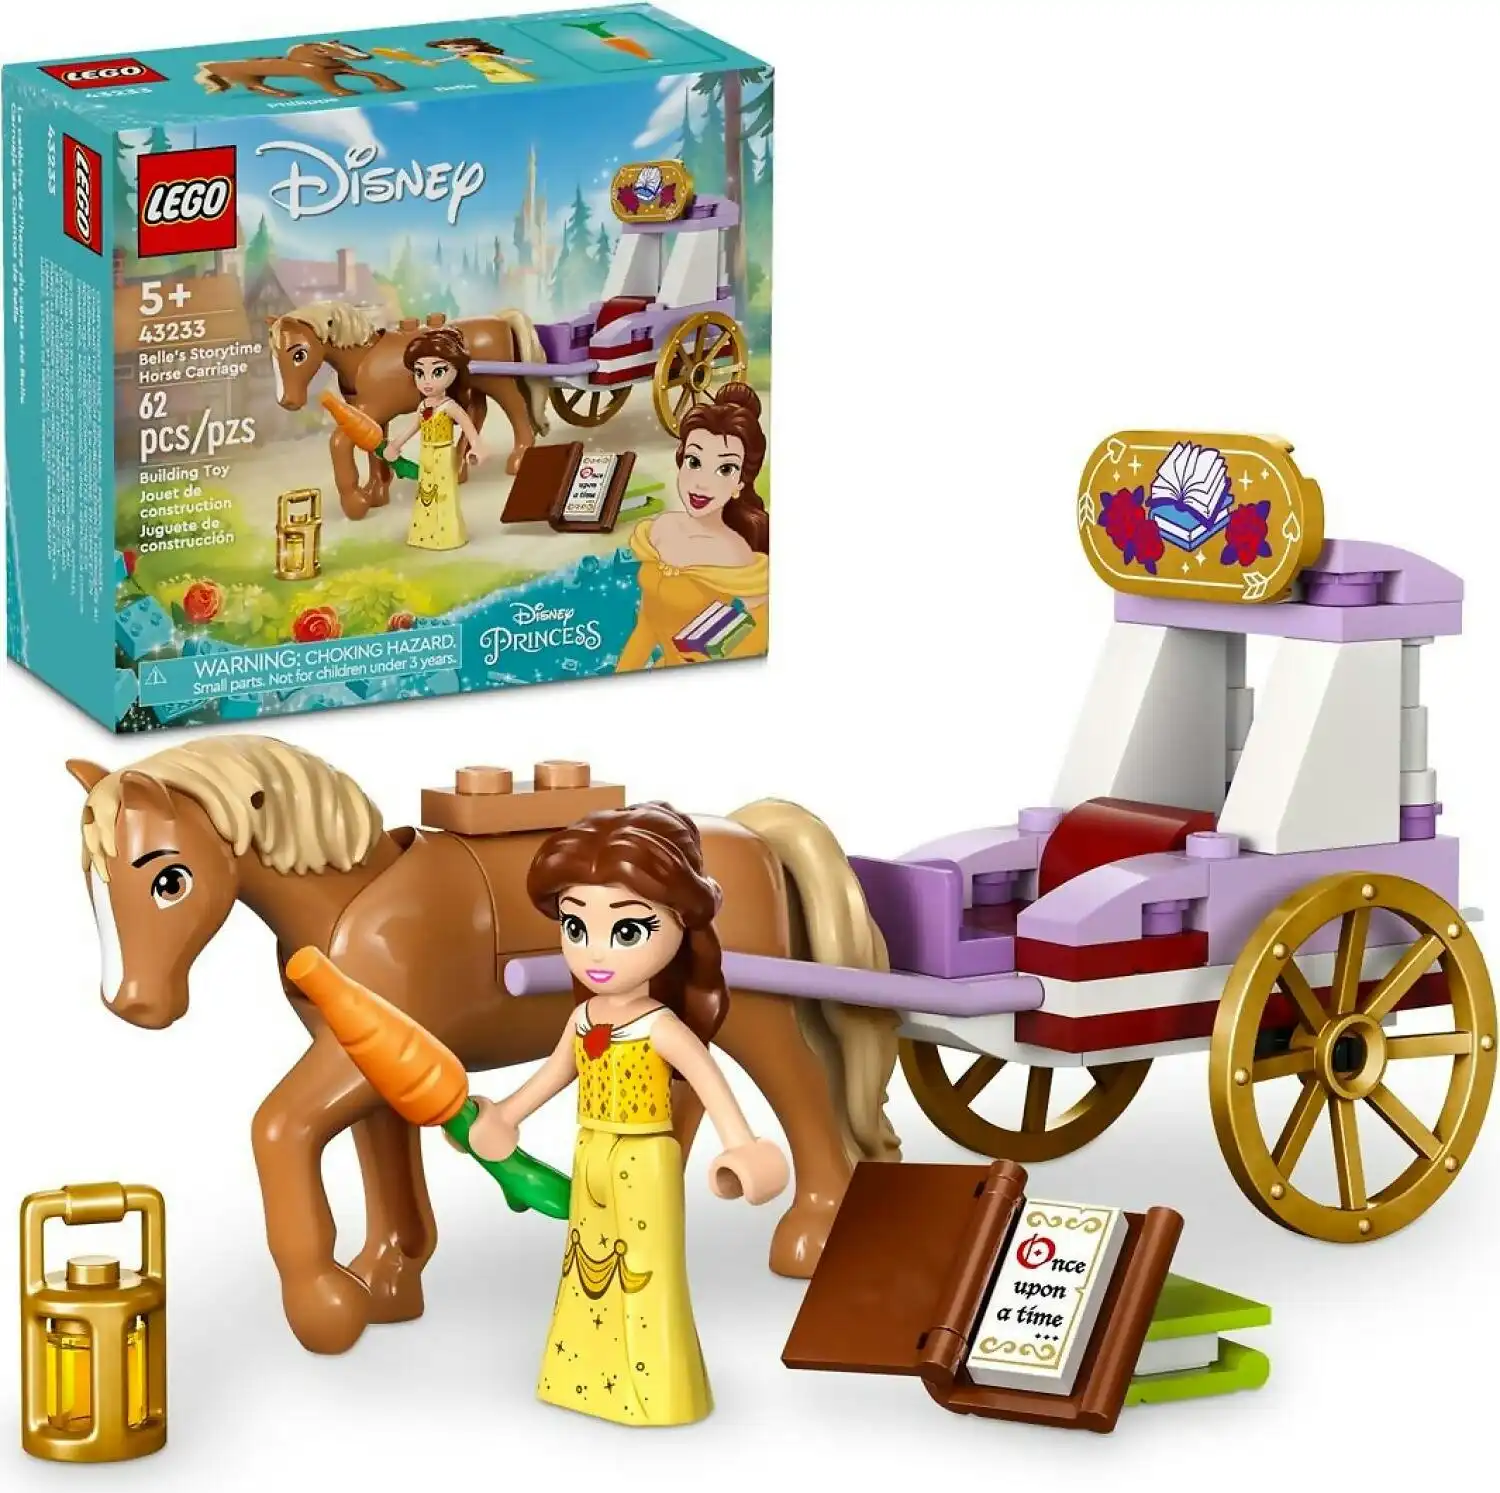 LEGO 43233 Belle's Storytime Horse Carriage - Disney Princess